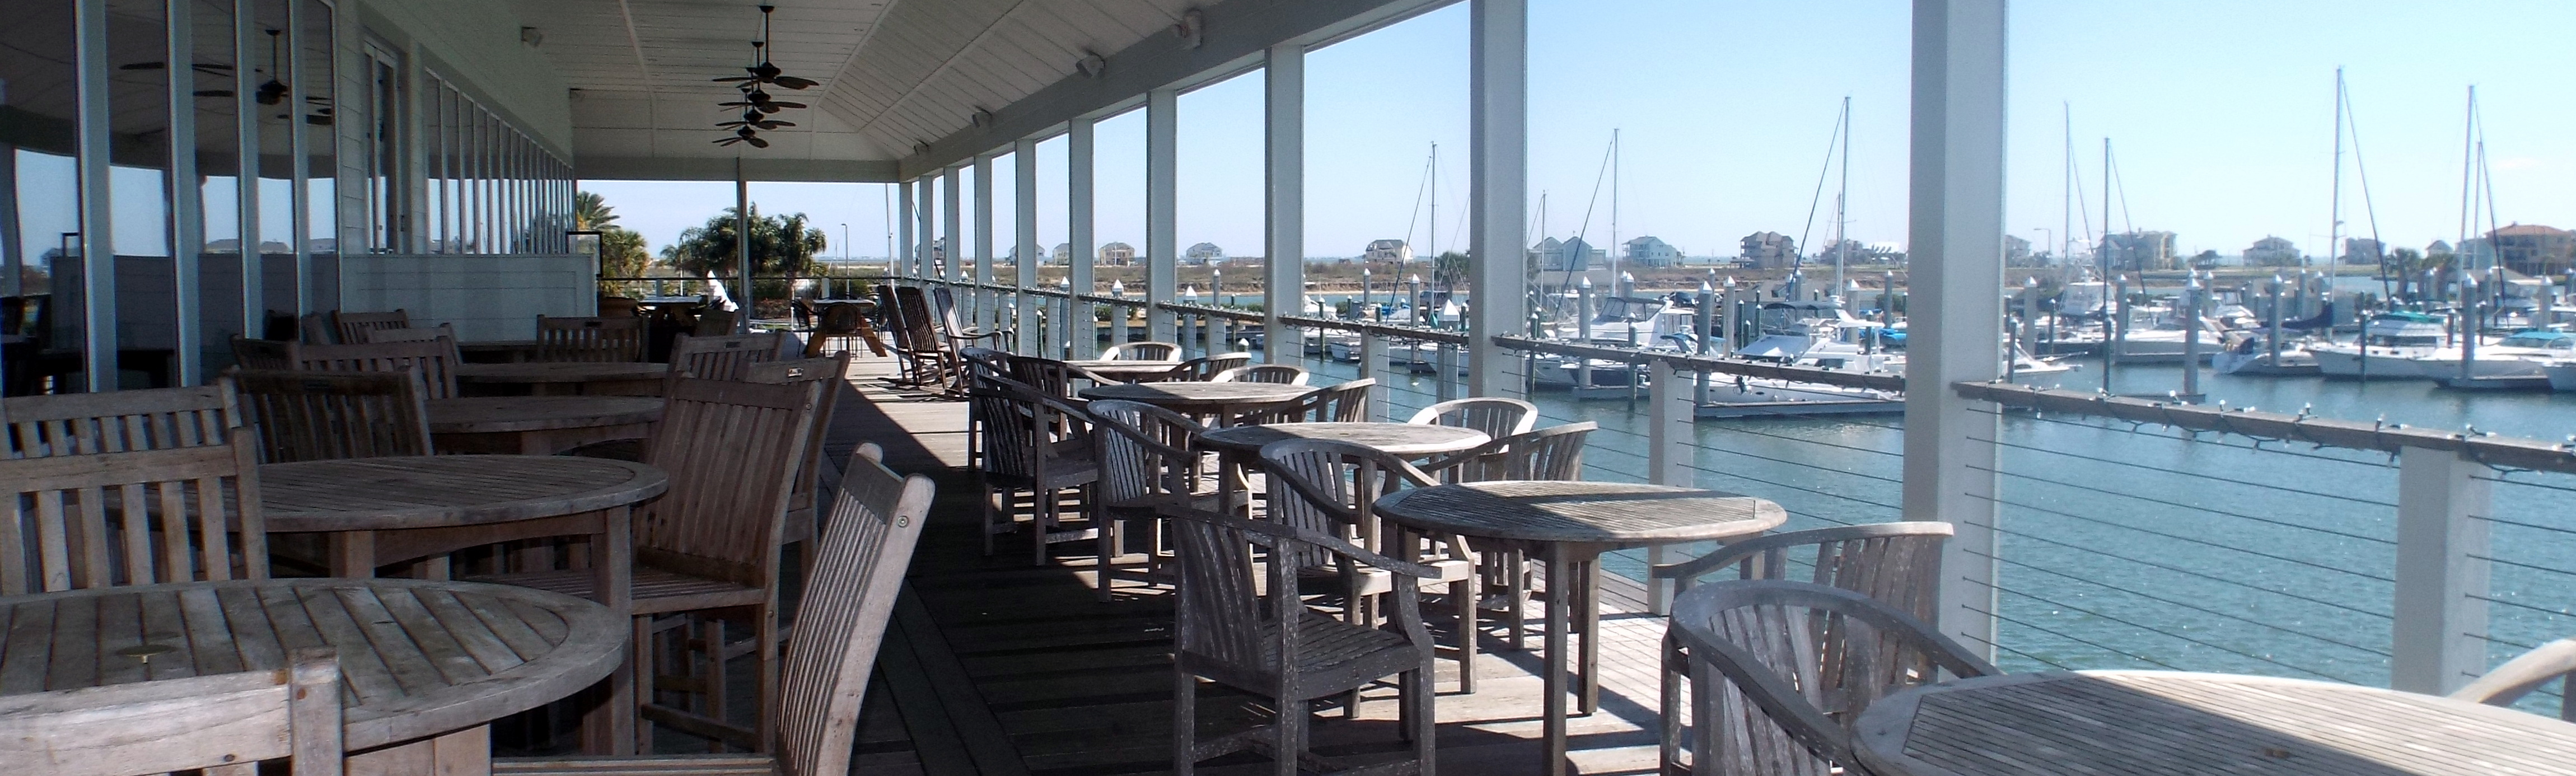 Galveston Restaurants On The Water | Best Restaurants Near Me